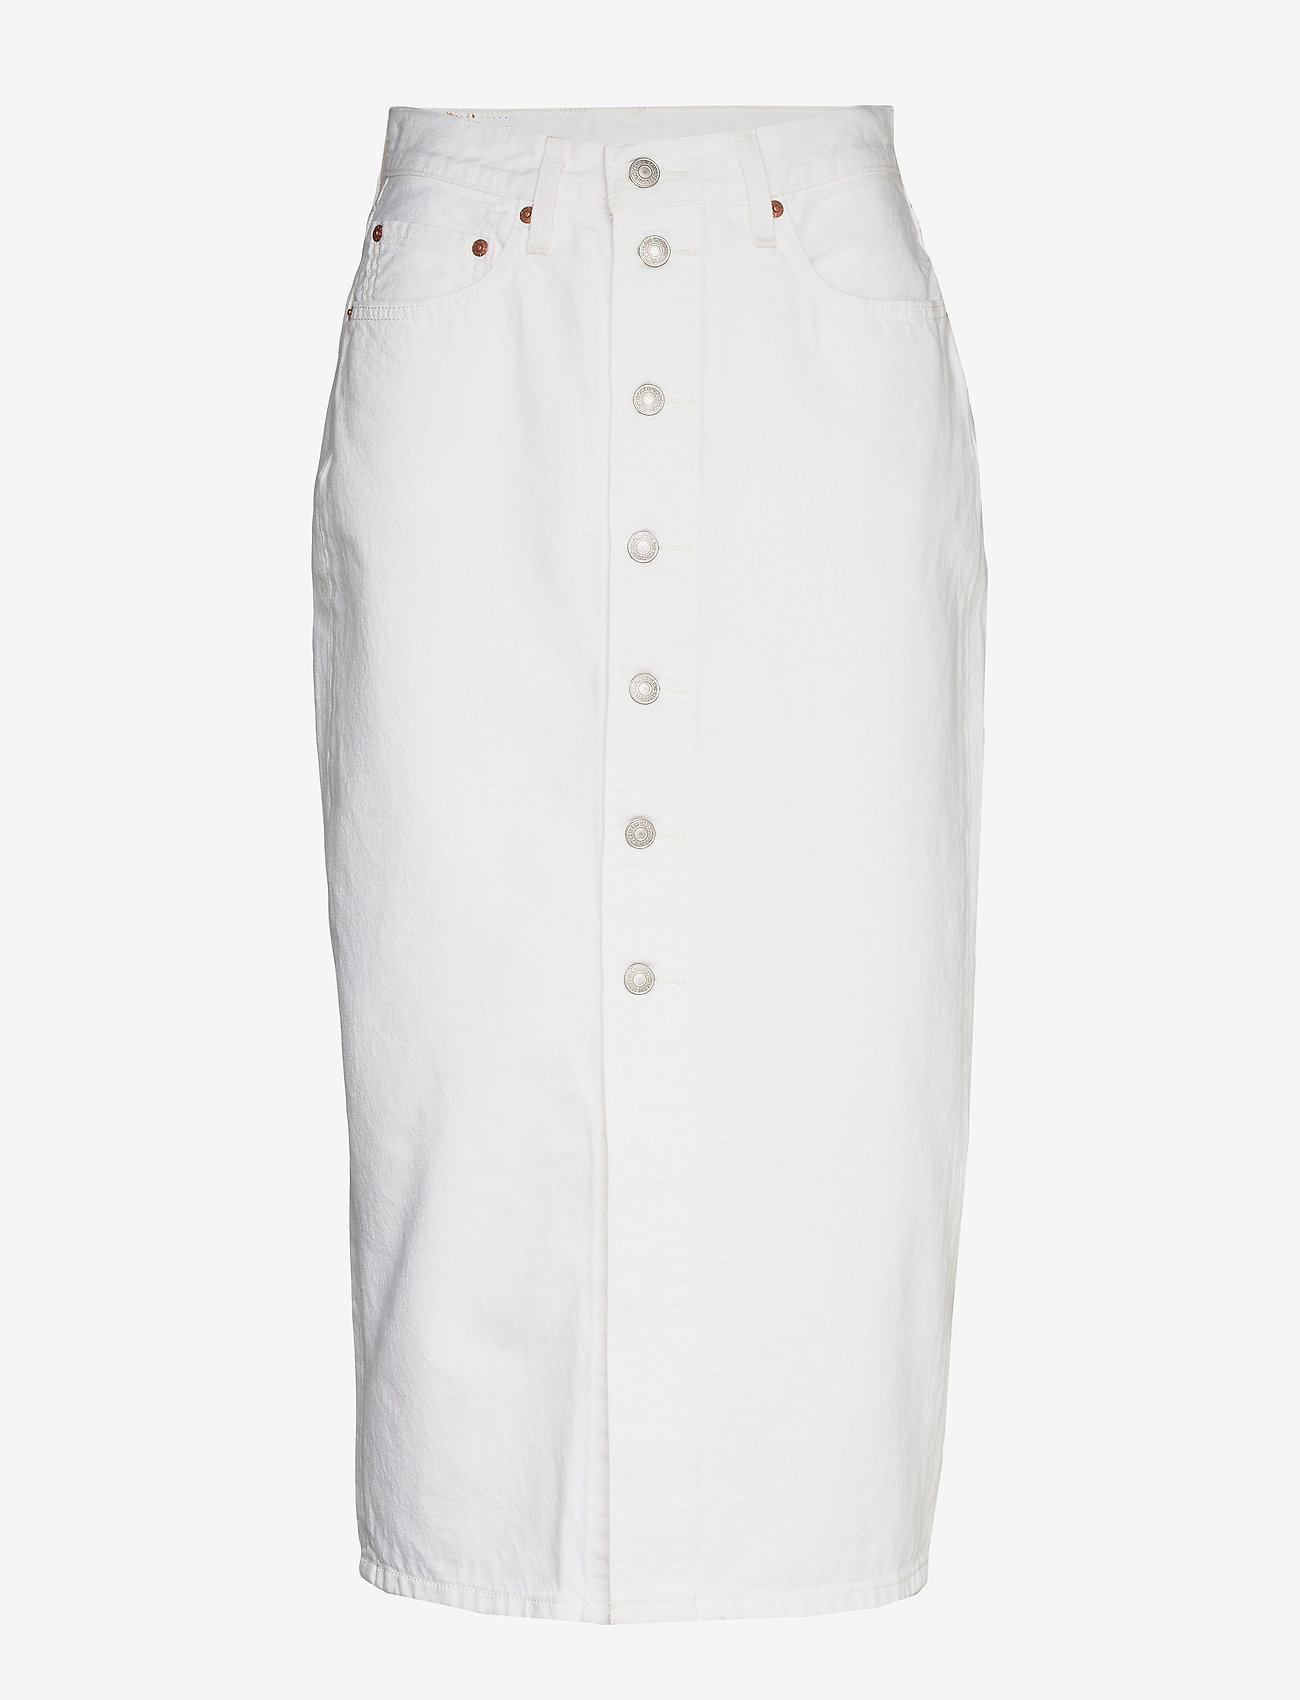 levi's button front skirt